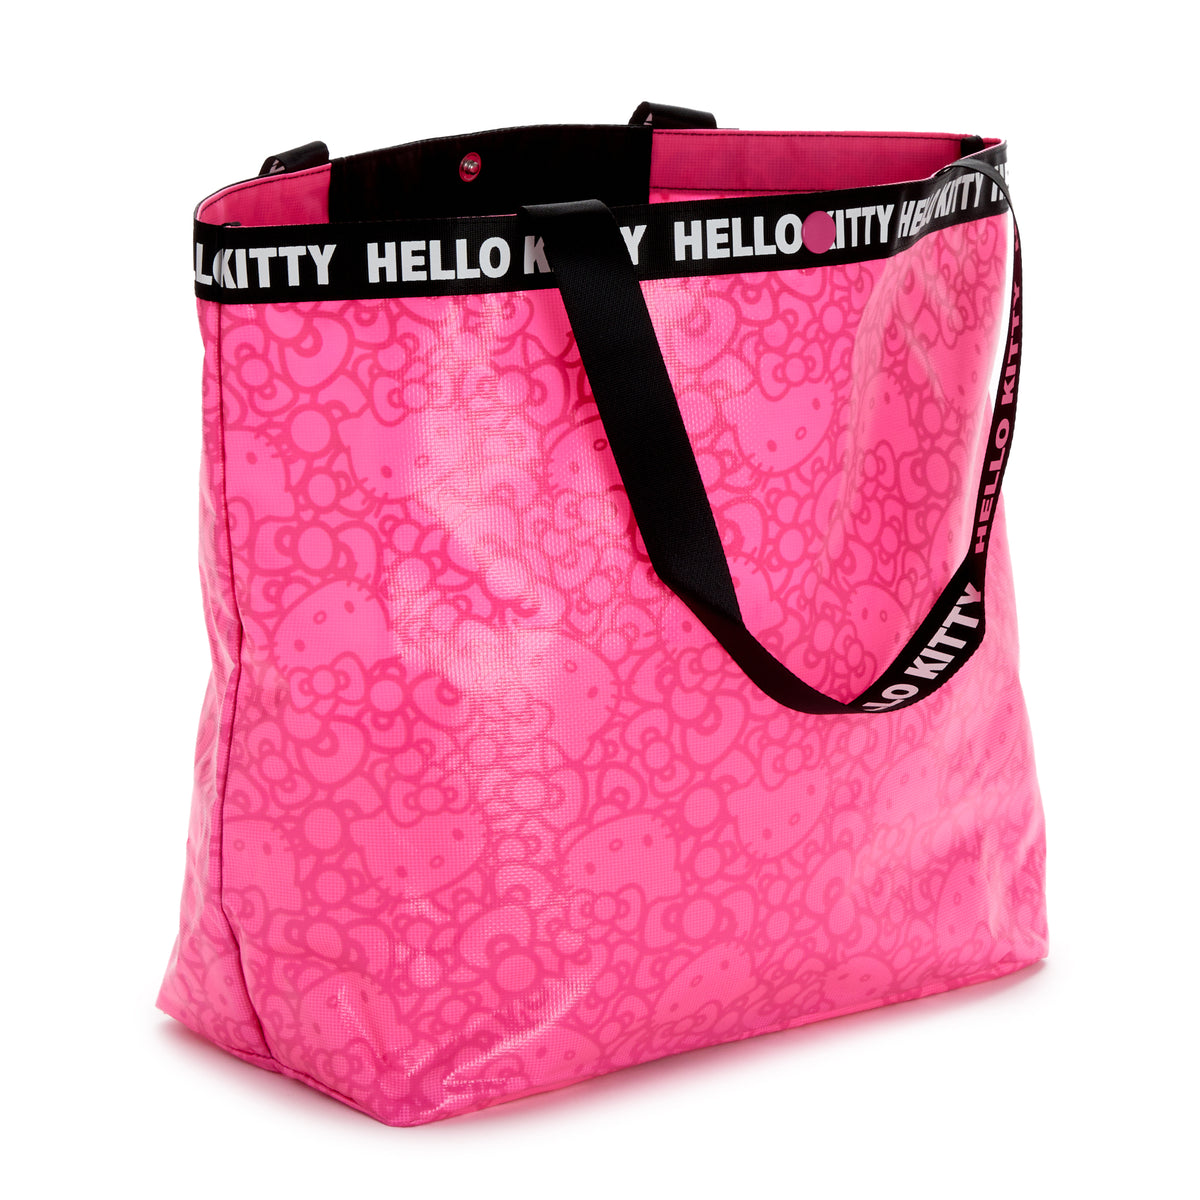 Limited Release* Hot Pink Lattice Stitch Nylon Tote Bag - KiKi's Mercato